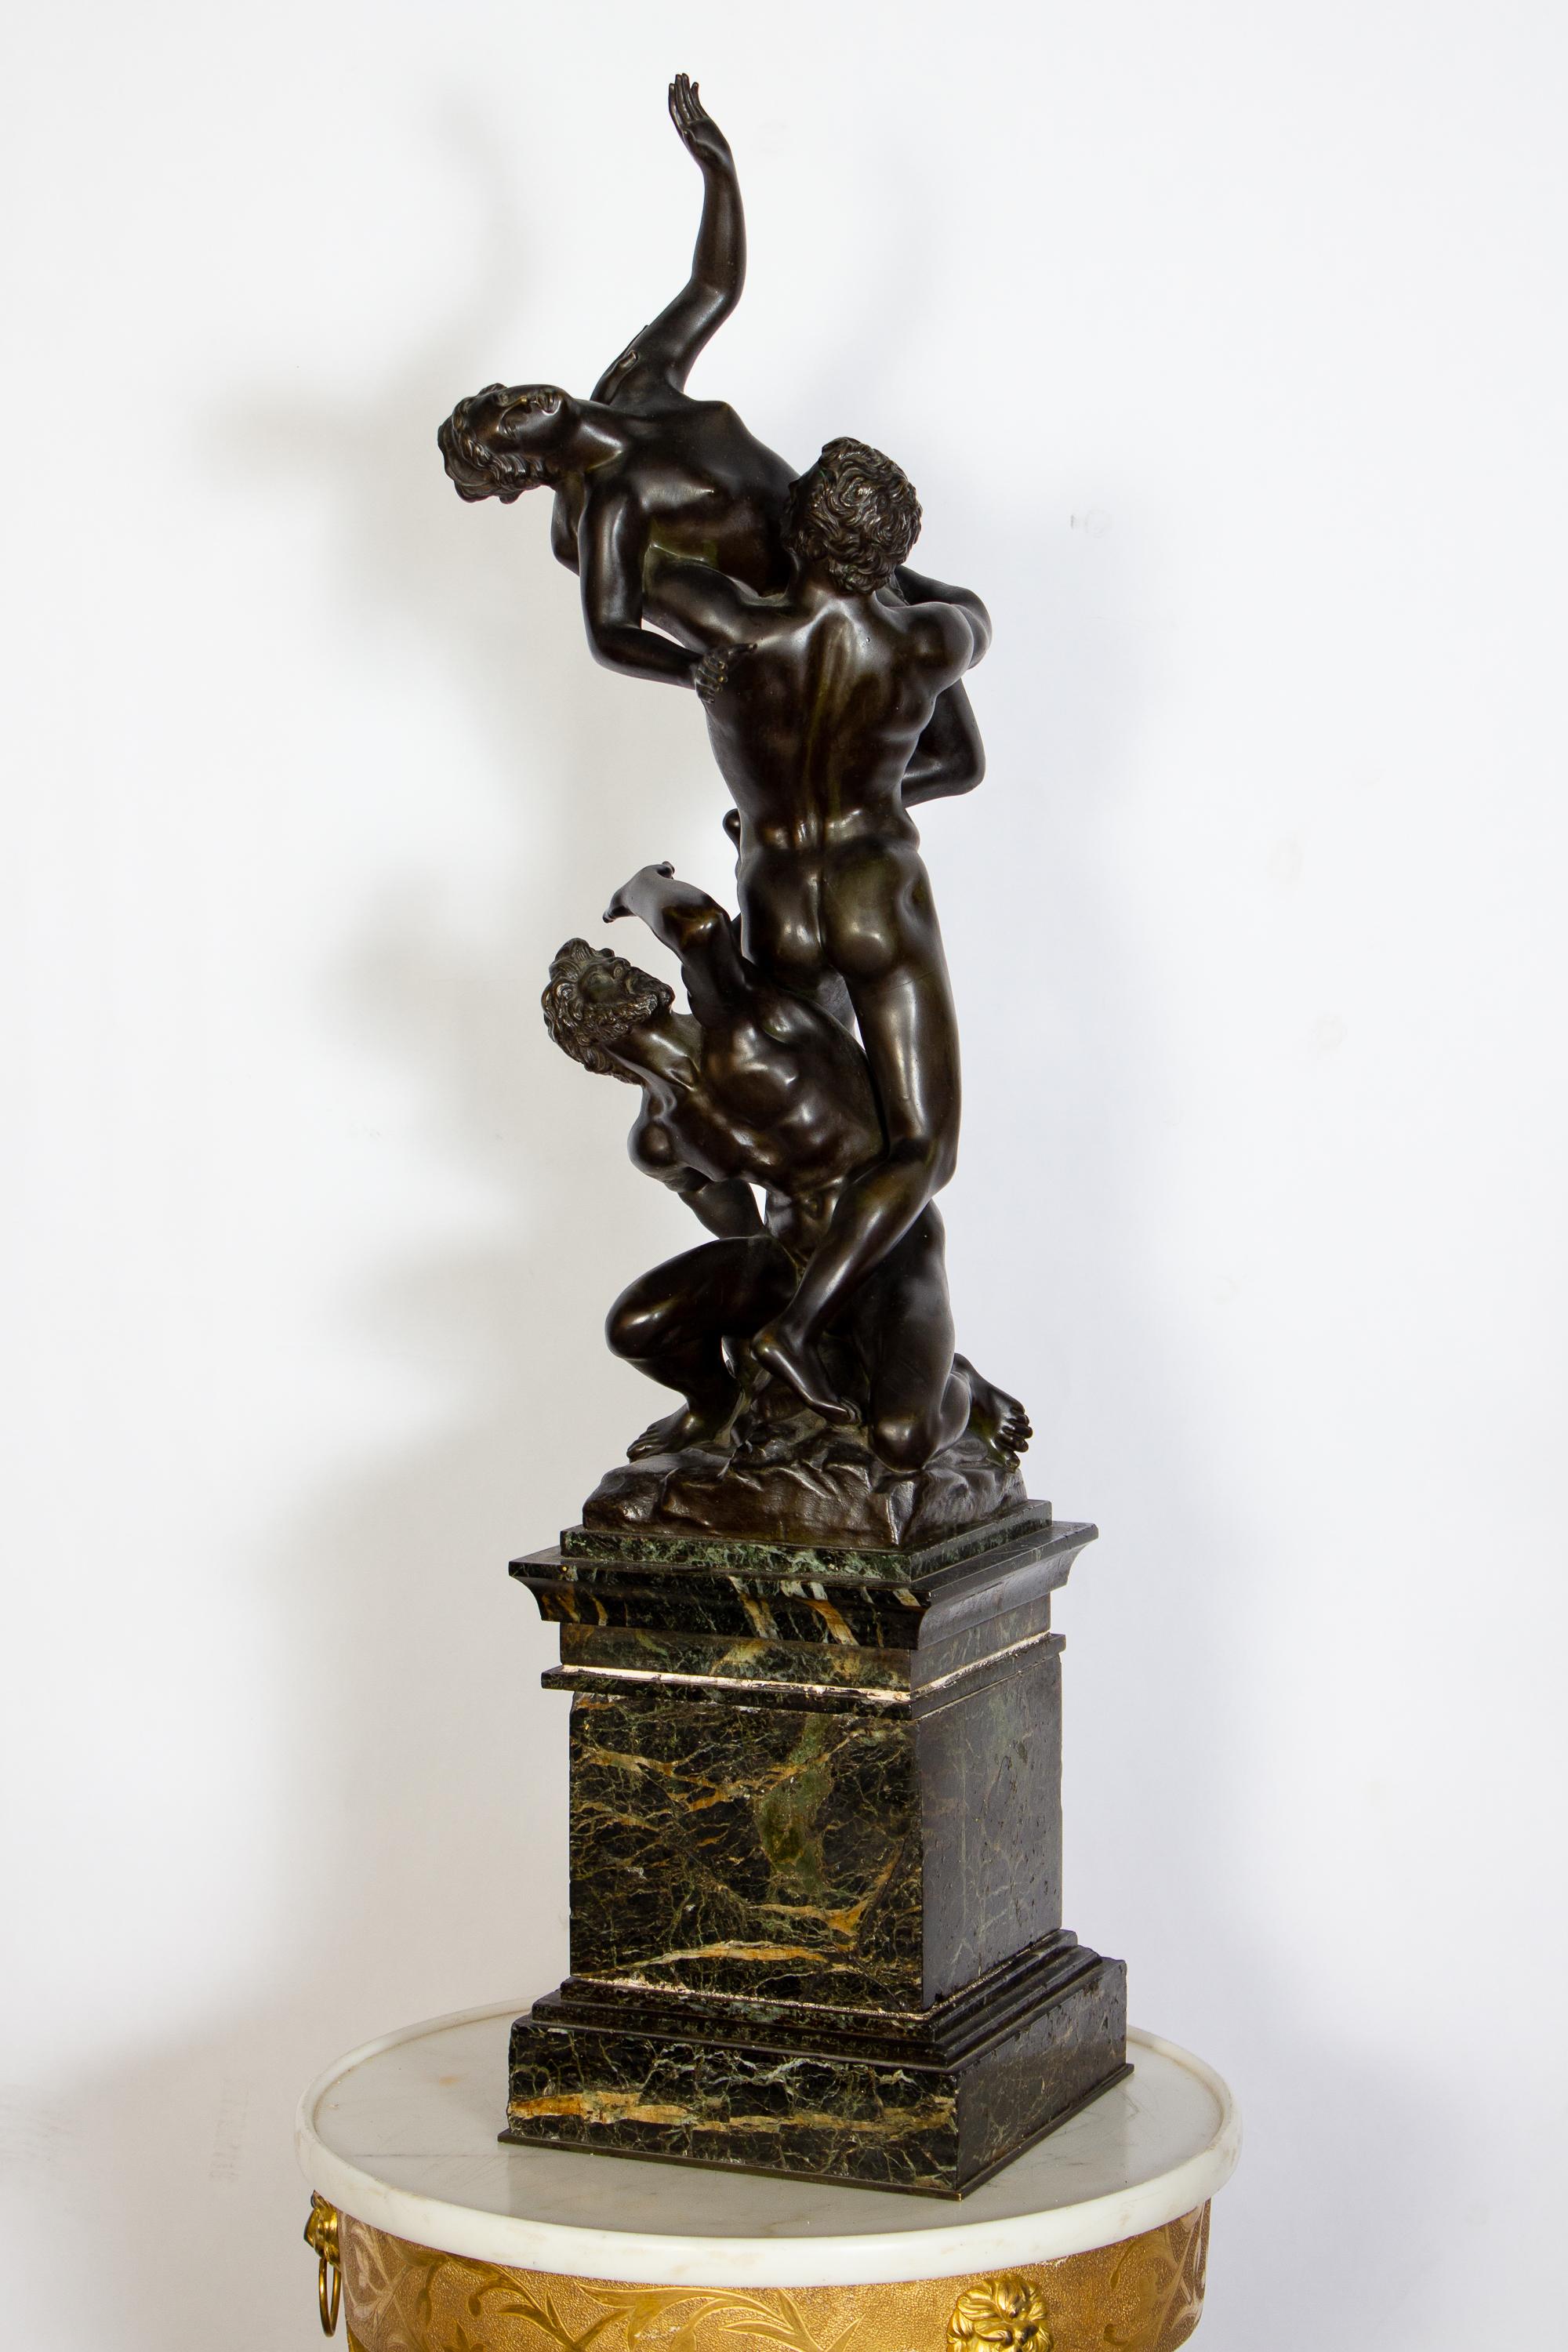 The Rape of Sabine Iconic Bronze Sculpture 1930 - Gold Nude Sculpture by Jean de Boulogne (Giambologna)